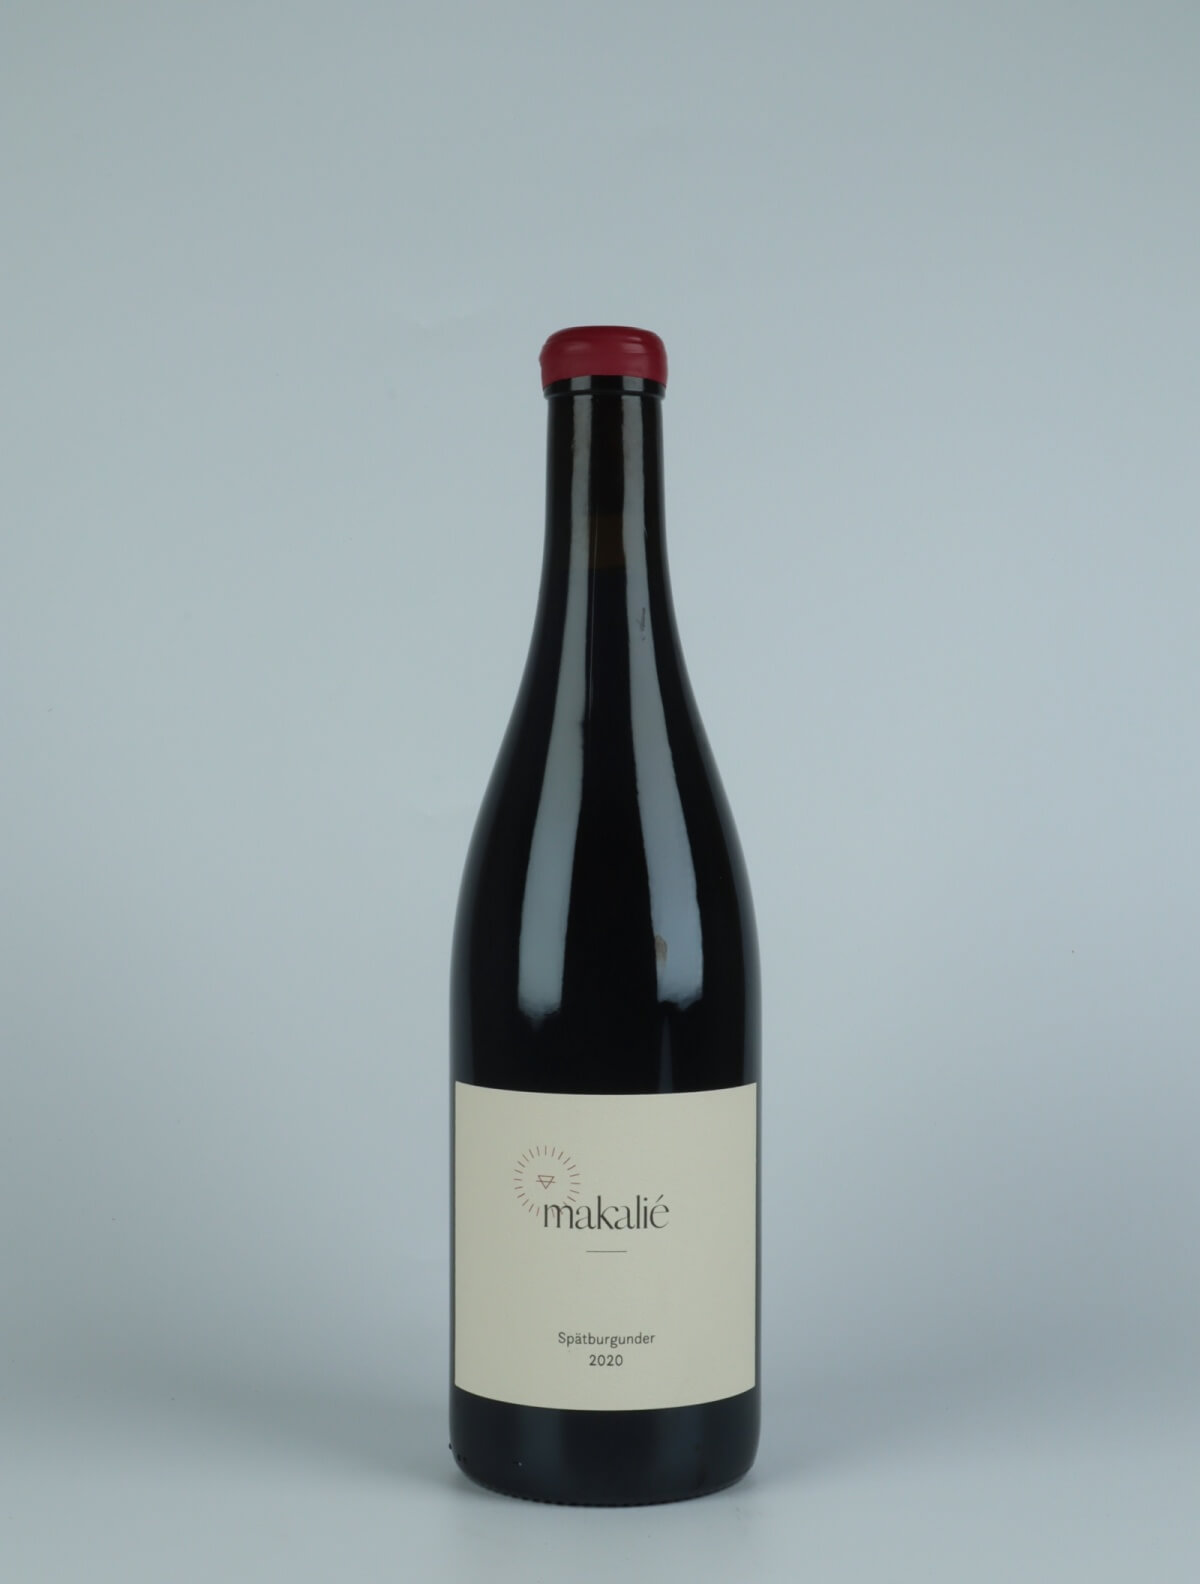 A bottle 2020 Spätburgunder Red wine from Makalié, Baden in Germany